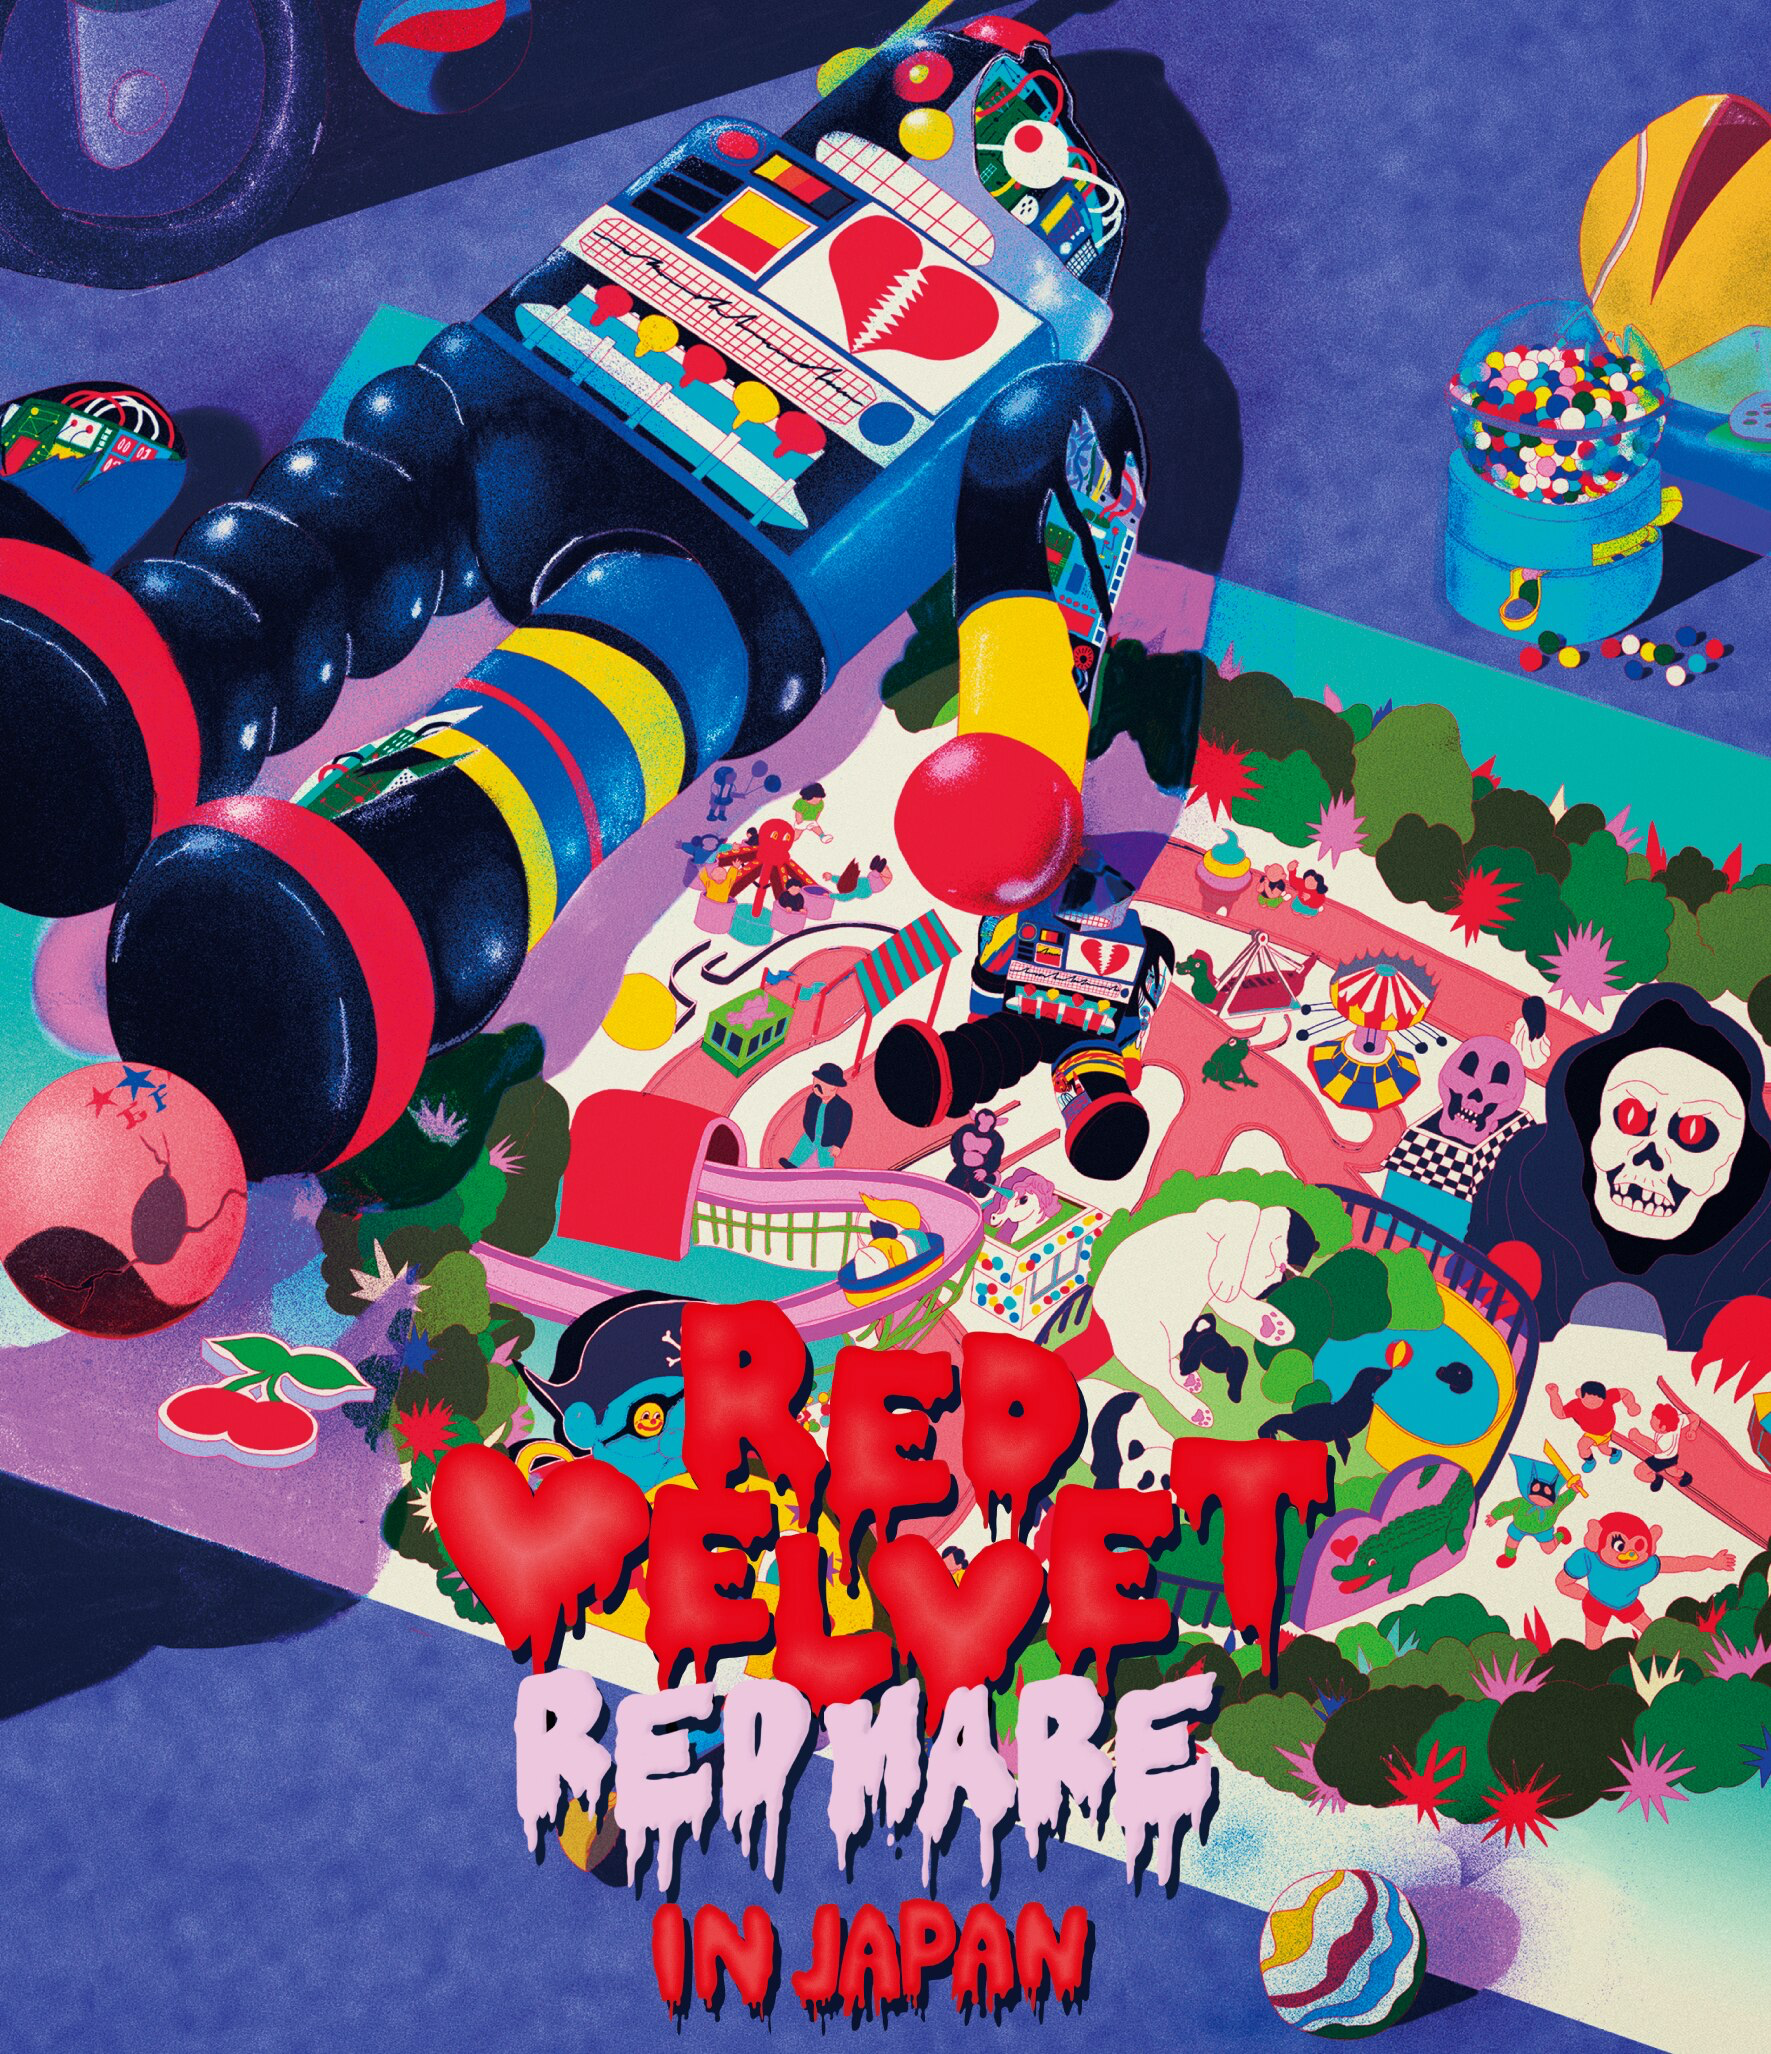 Red Velvet Arena in "REDMARE" | Kpop Wiki